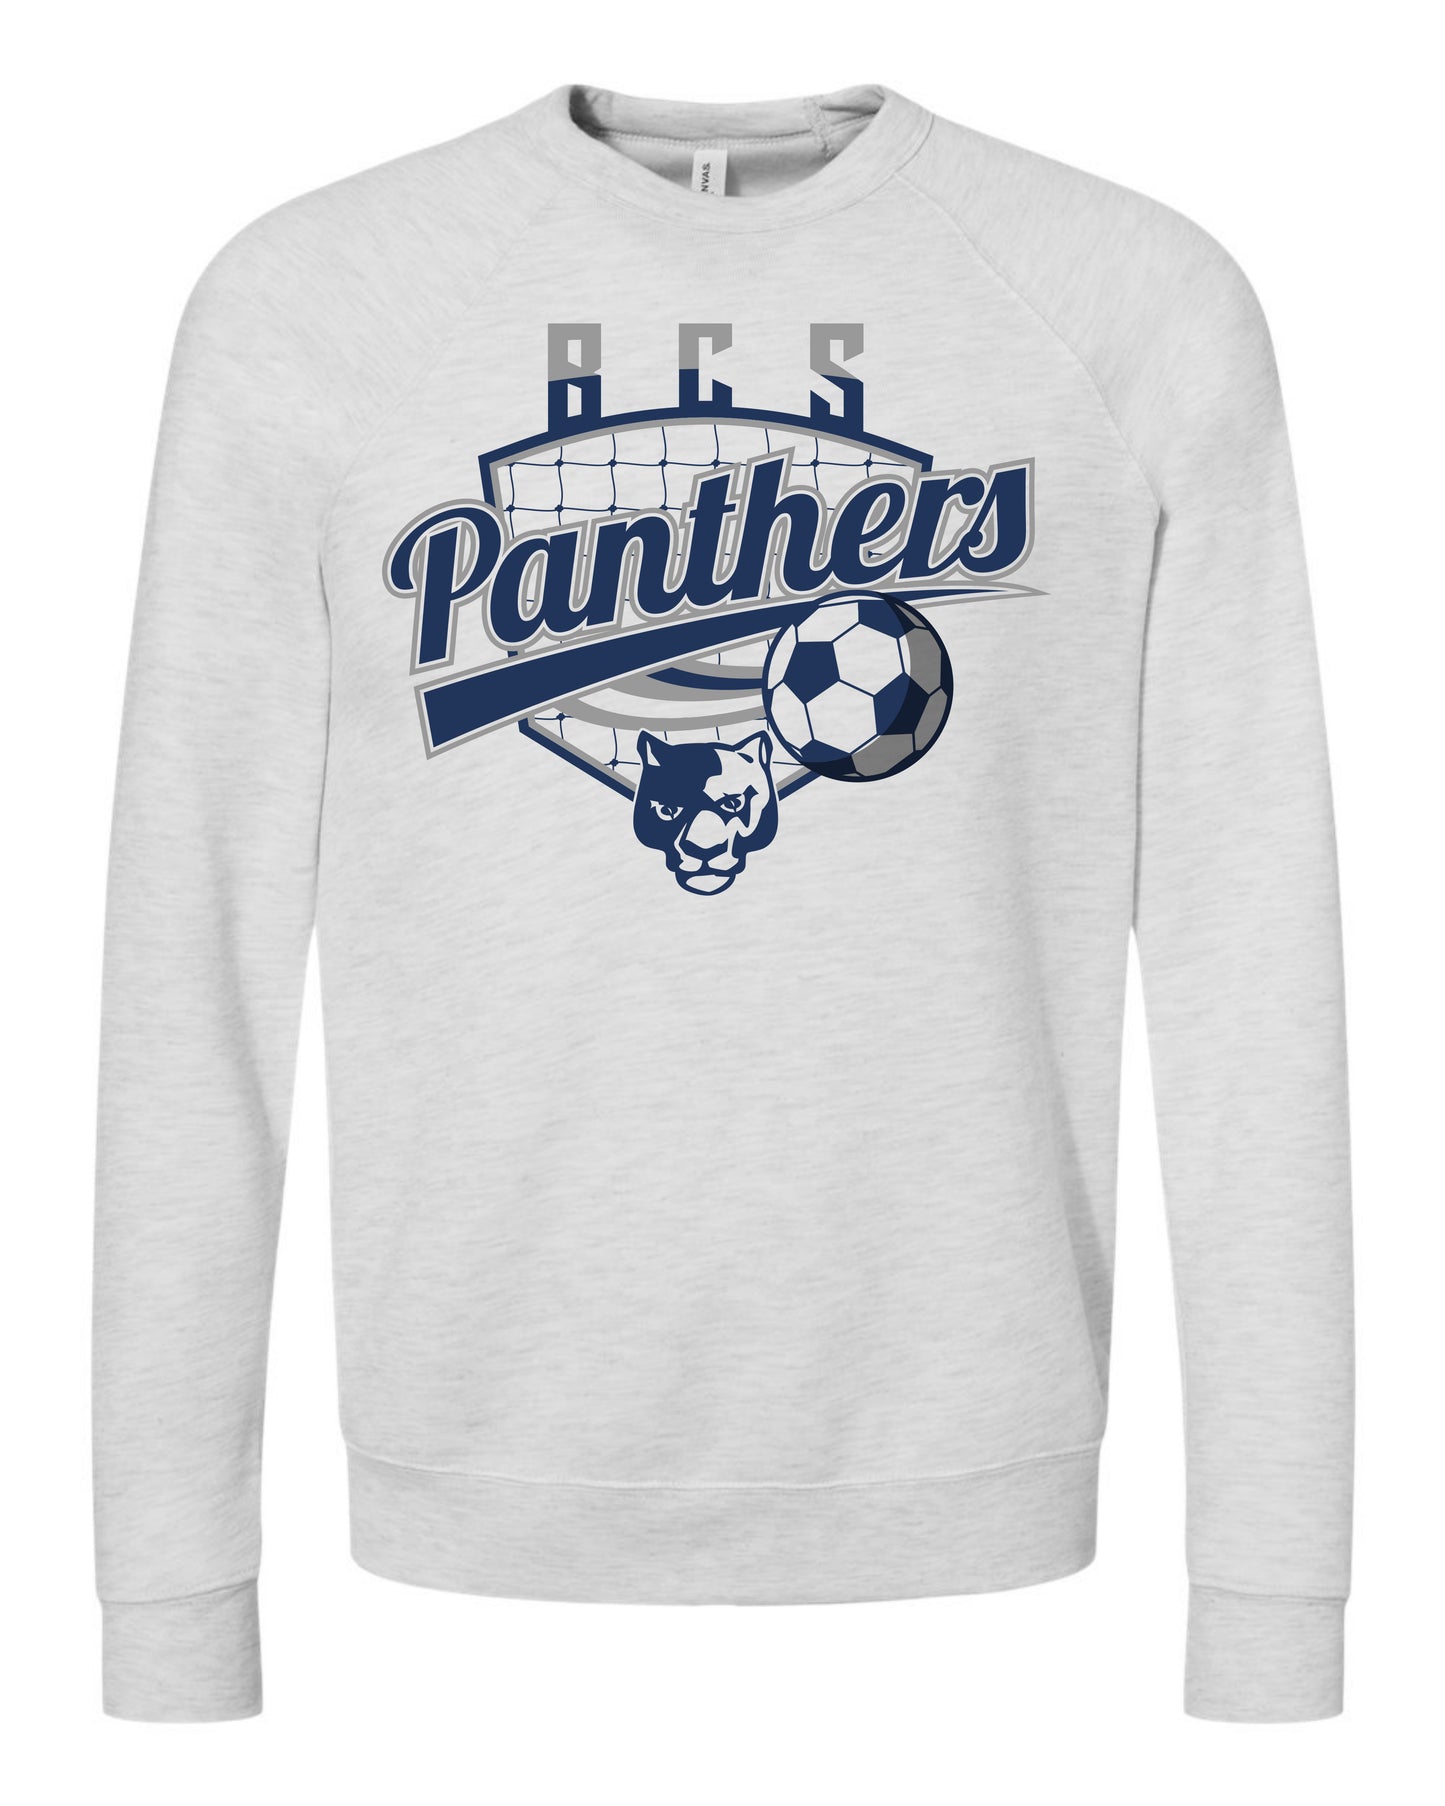 BCS Panthers Soccer Shield - Adult Sweatshirt